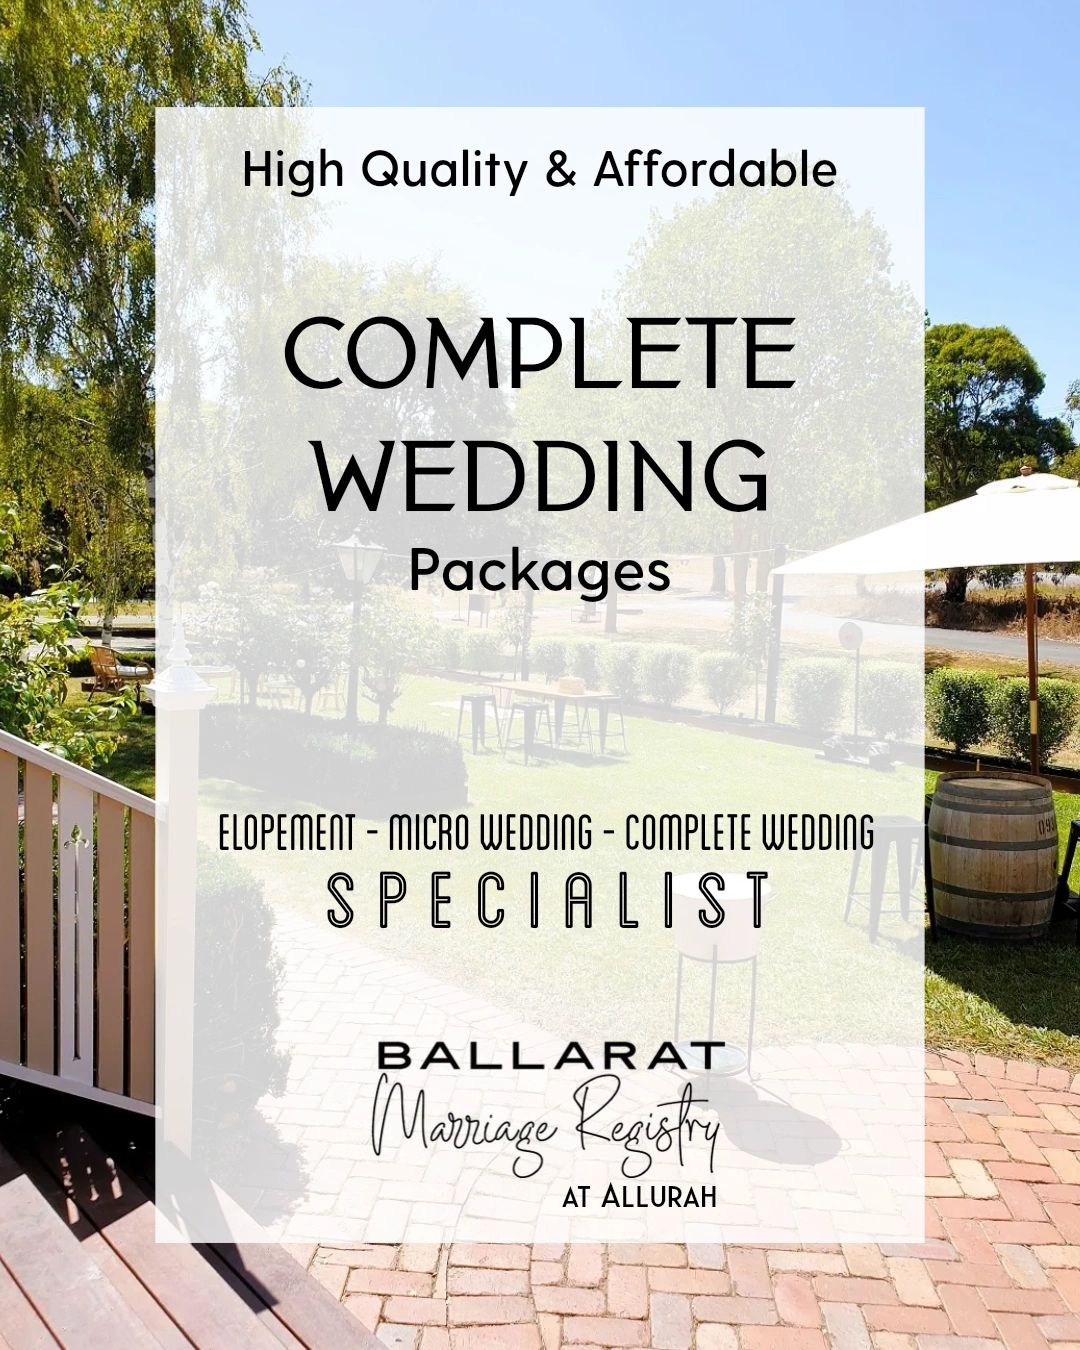 Ballarat Marriage Registry affordable weddings